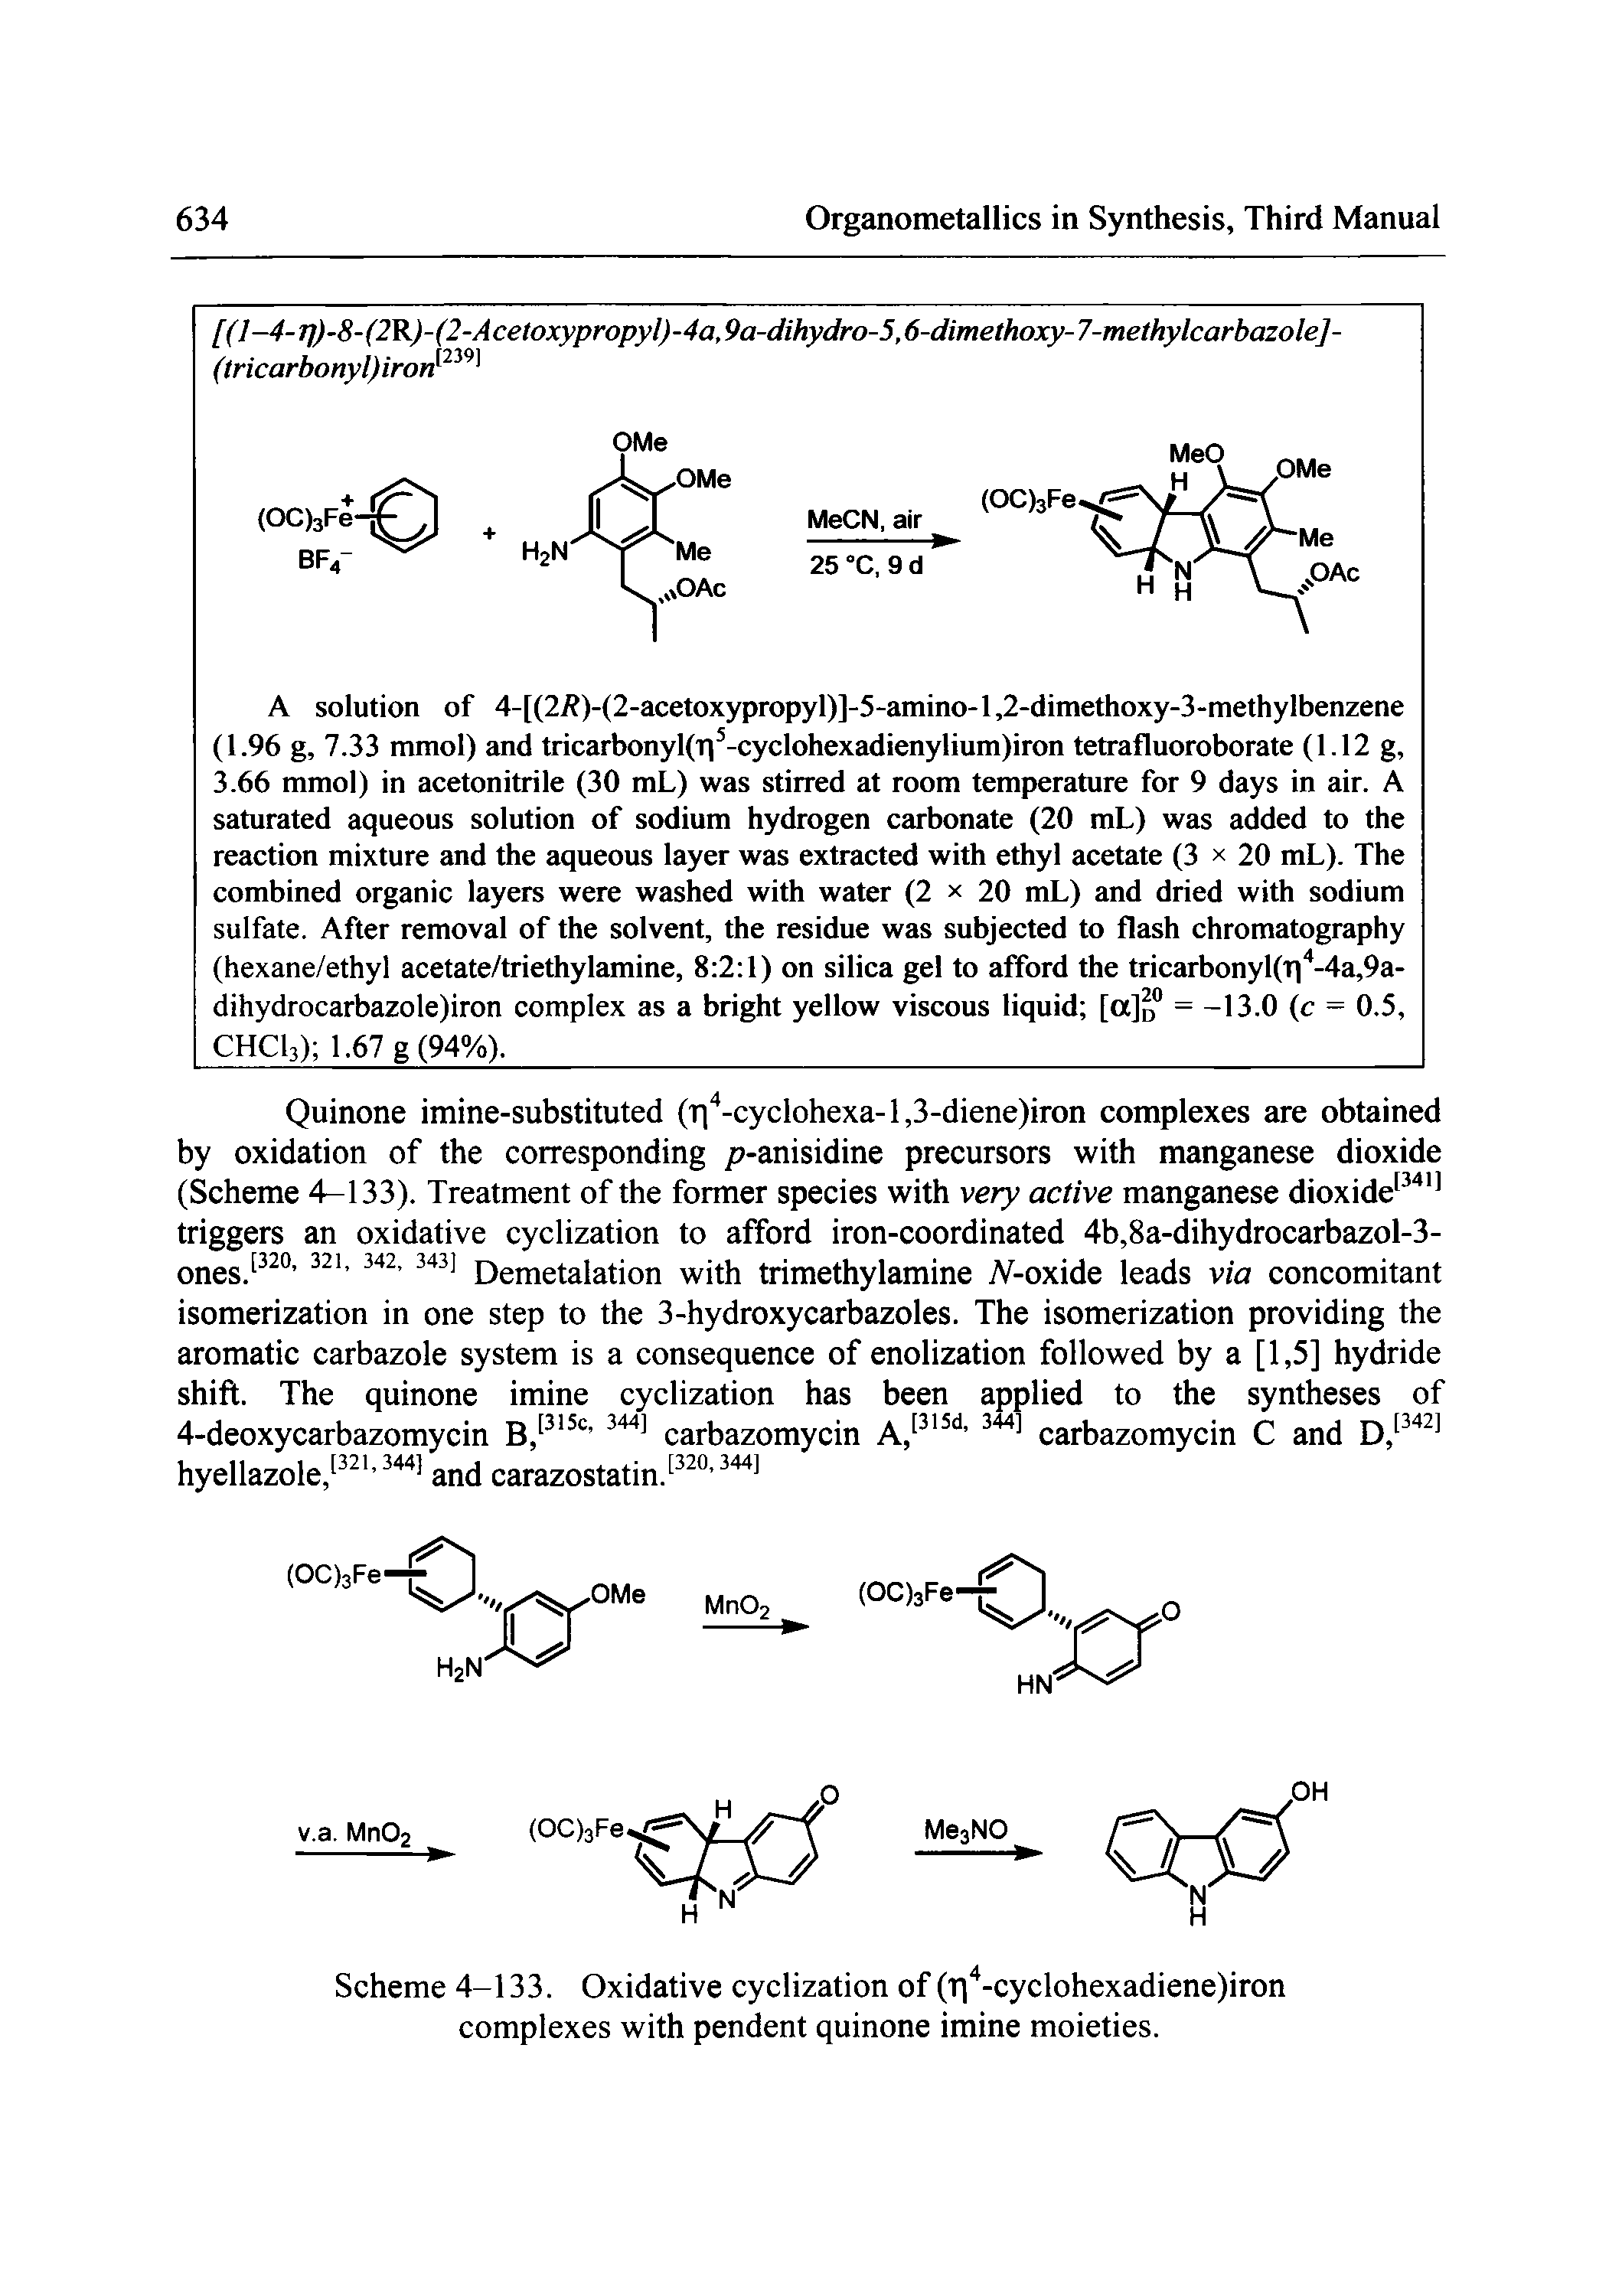 Scheme 4-133. Oxidative cyclization of (ri -cyclohexadiene)iron complexes with pendent quinone imine moieties.